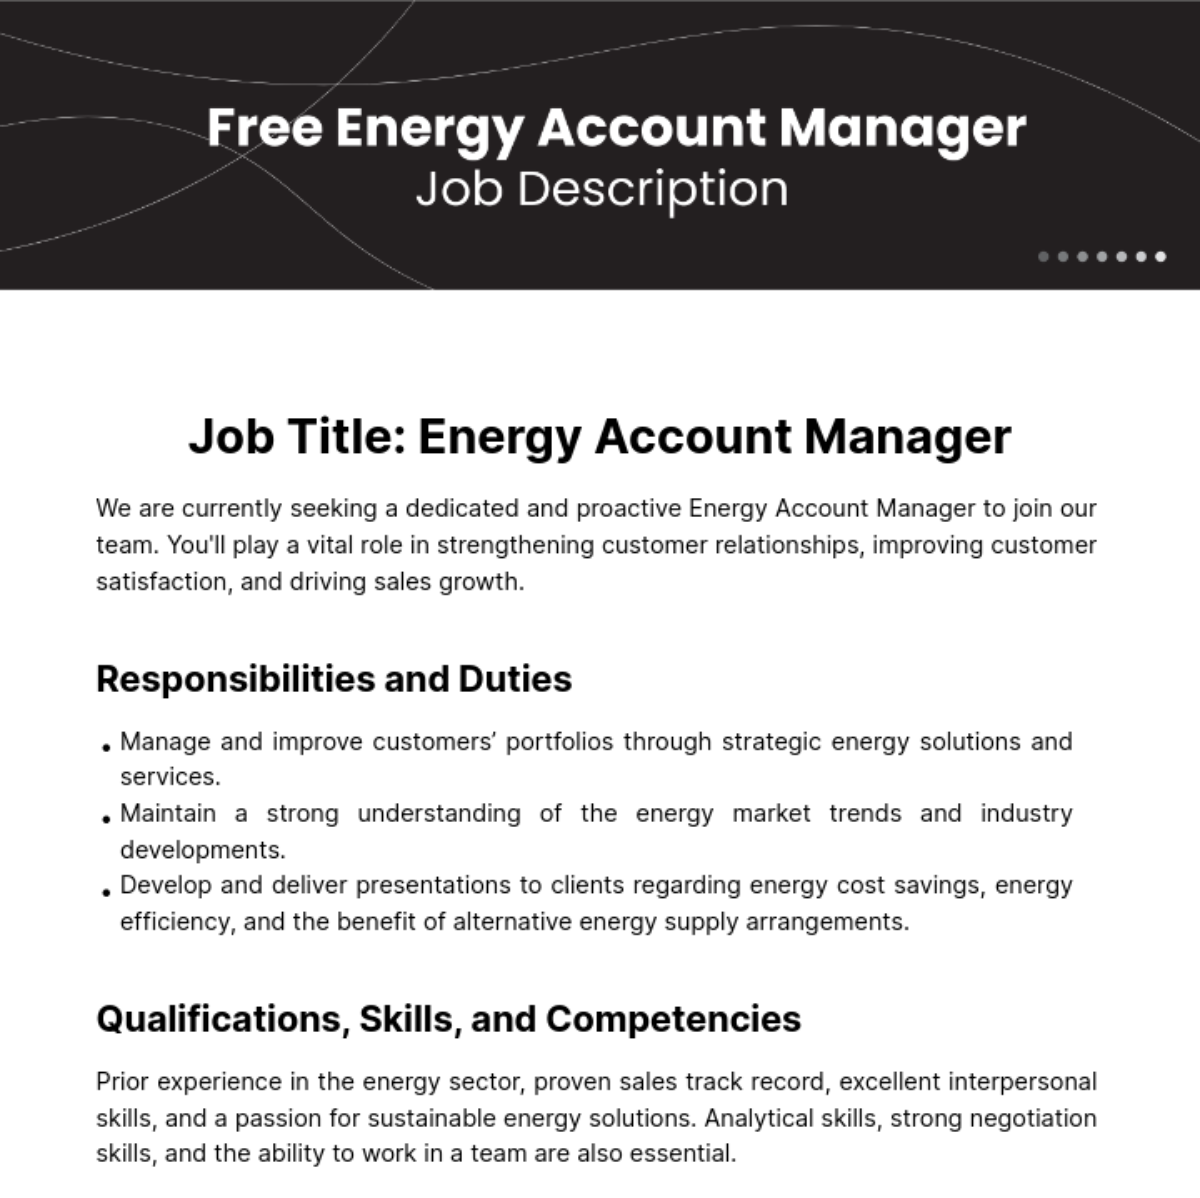 Energy Account Manager Job Description Template